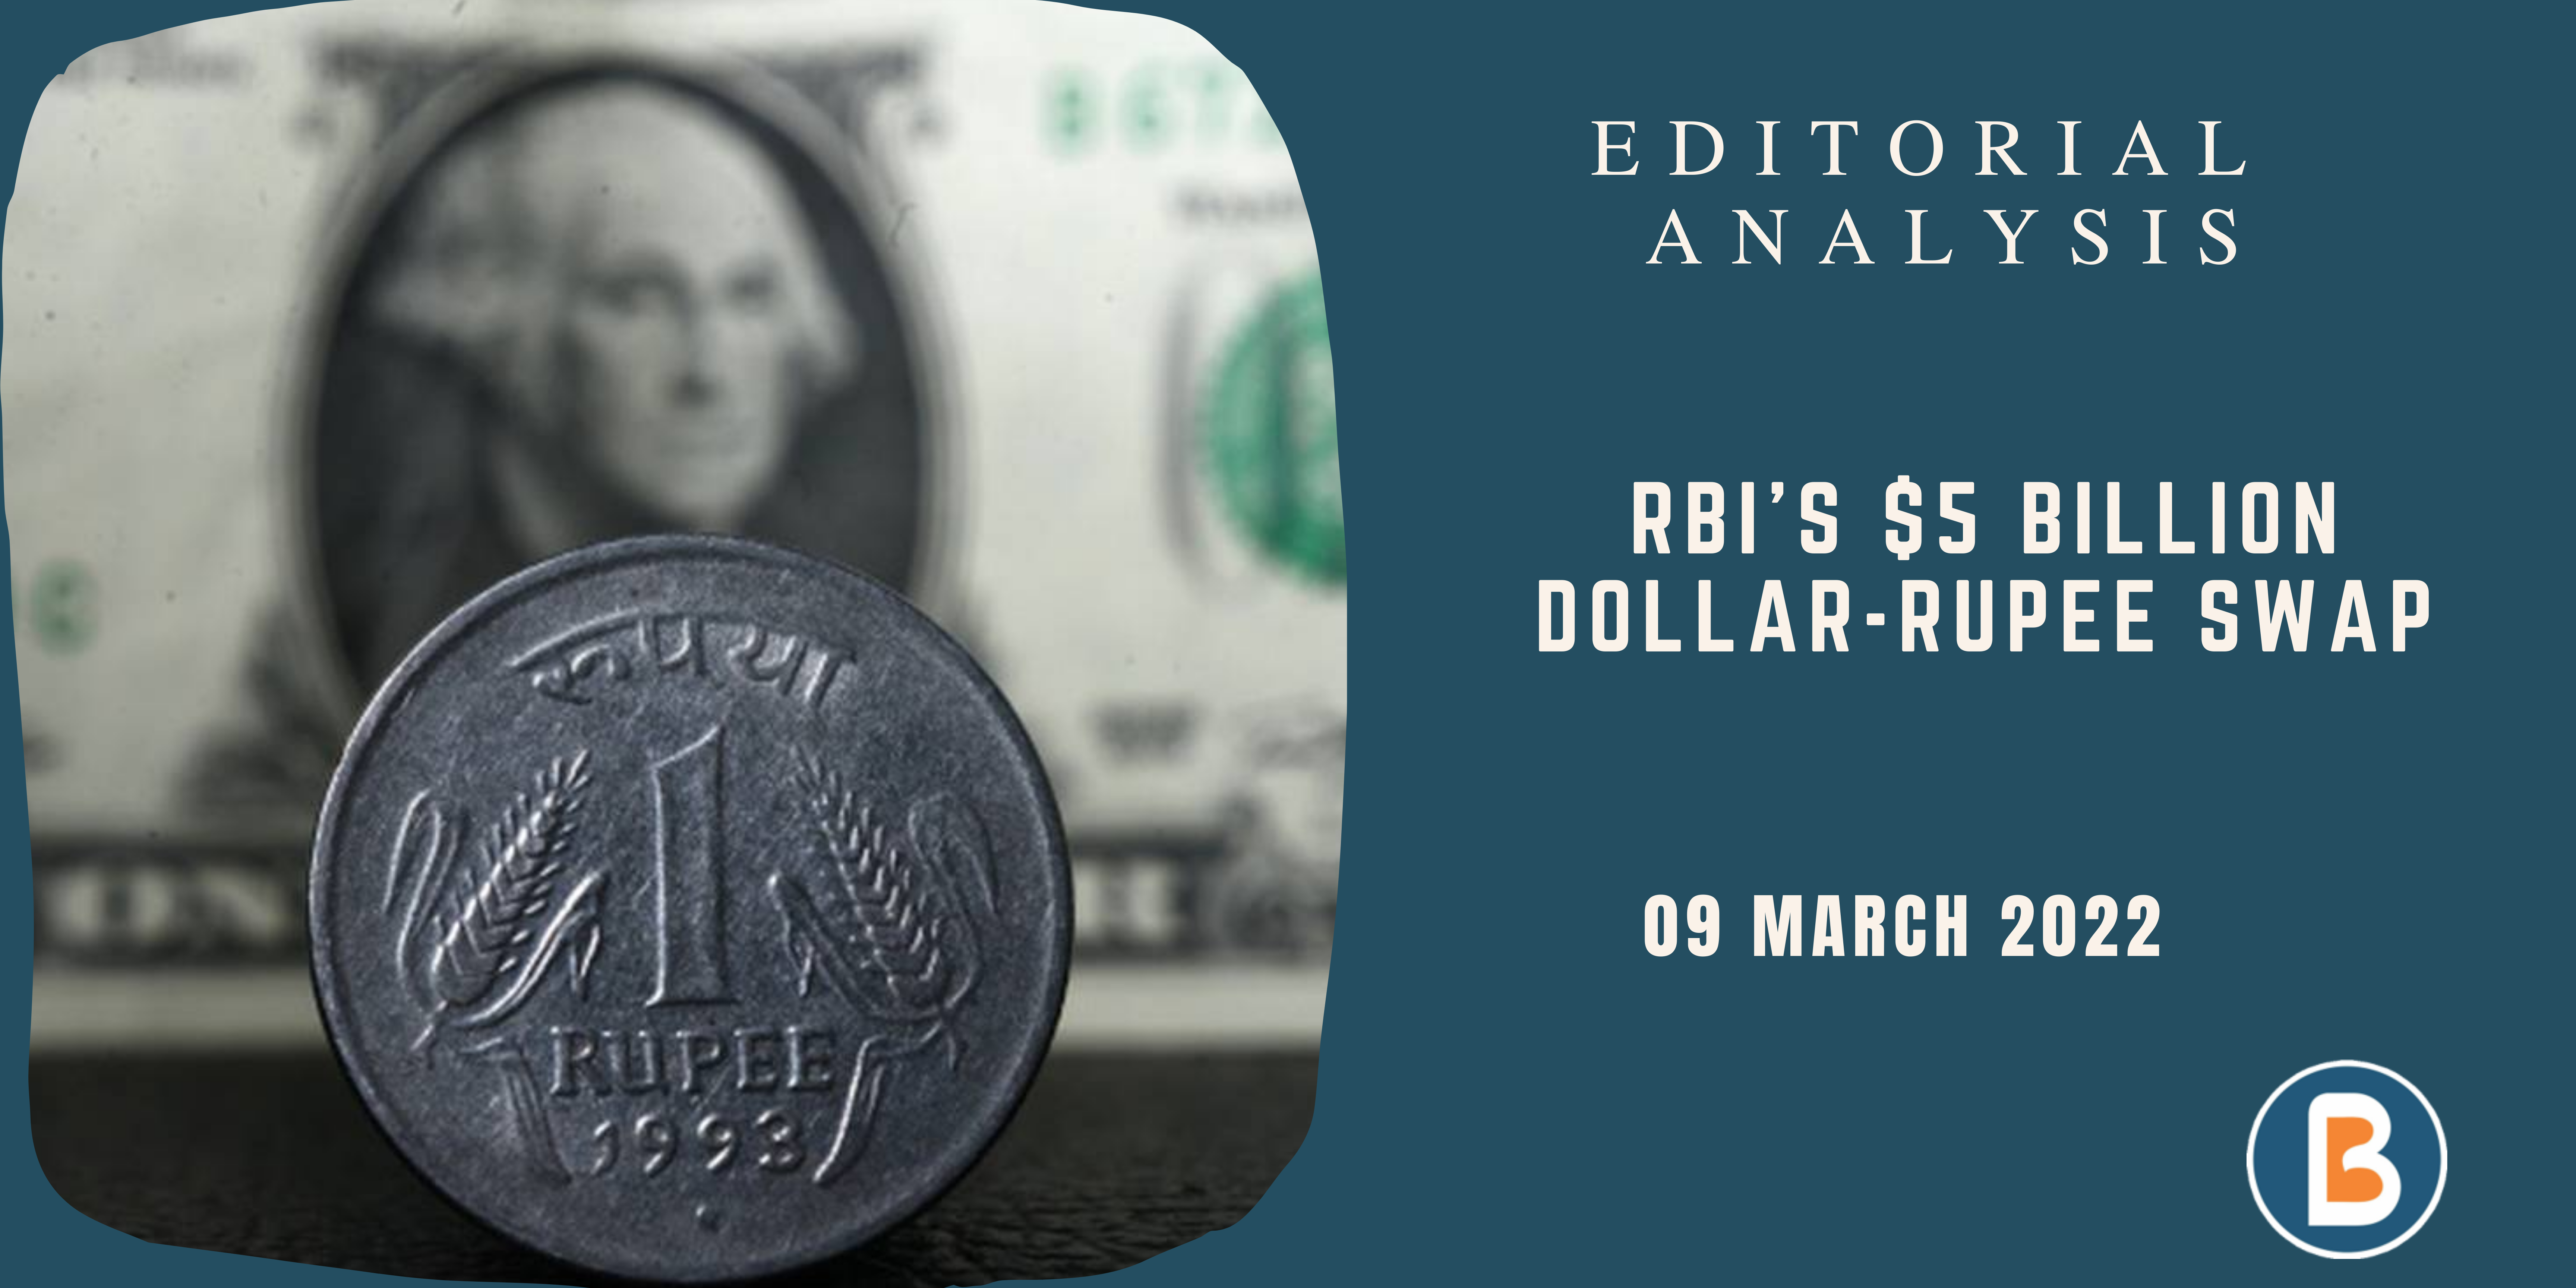 Editorial Analysis for UPSC - RBI's $5 Billion Dollar-Rupee Swap